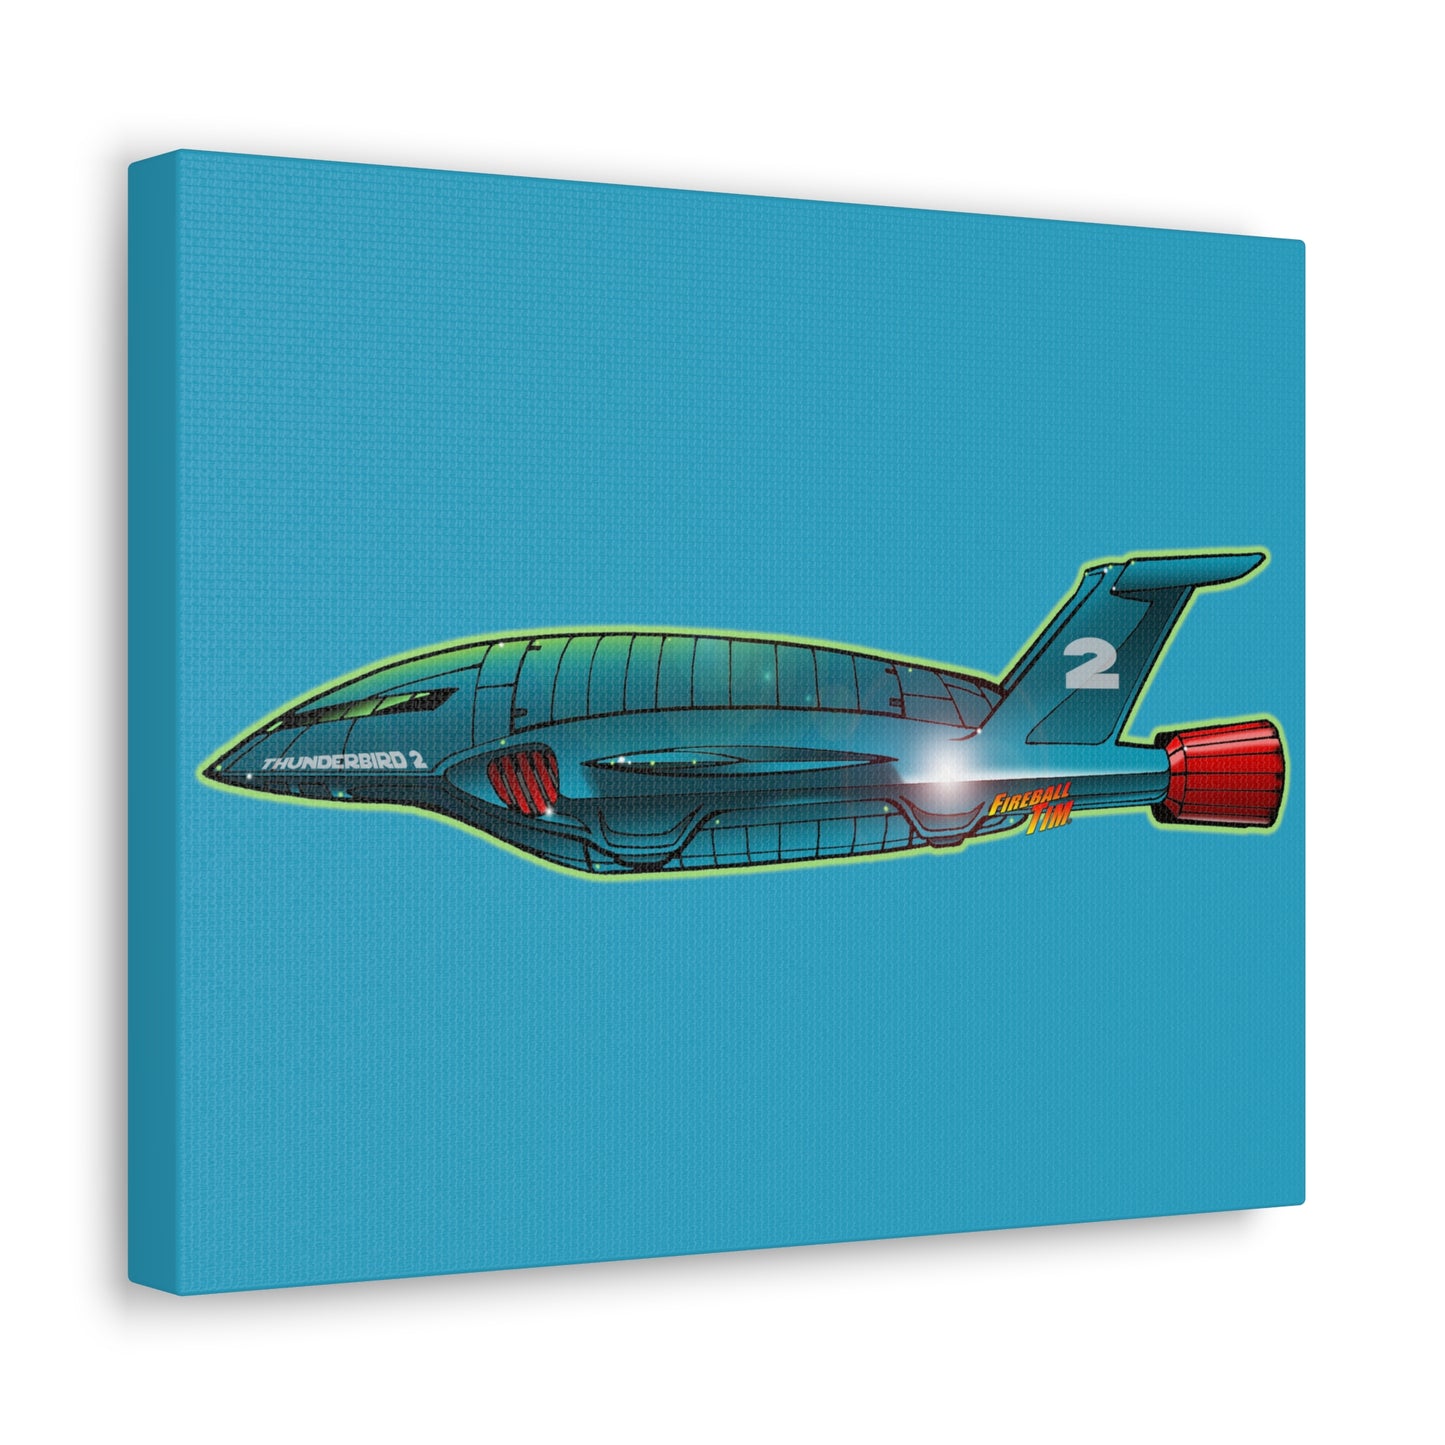 THUNDERBIRD 2 Spaceship Canvas Gallery Art Print 11x14